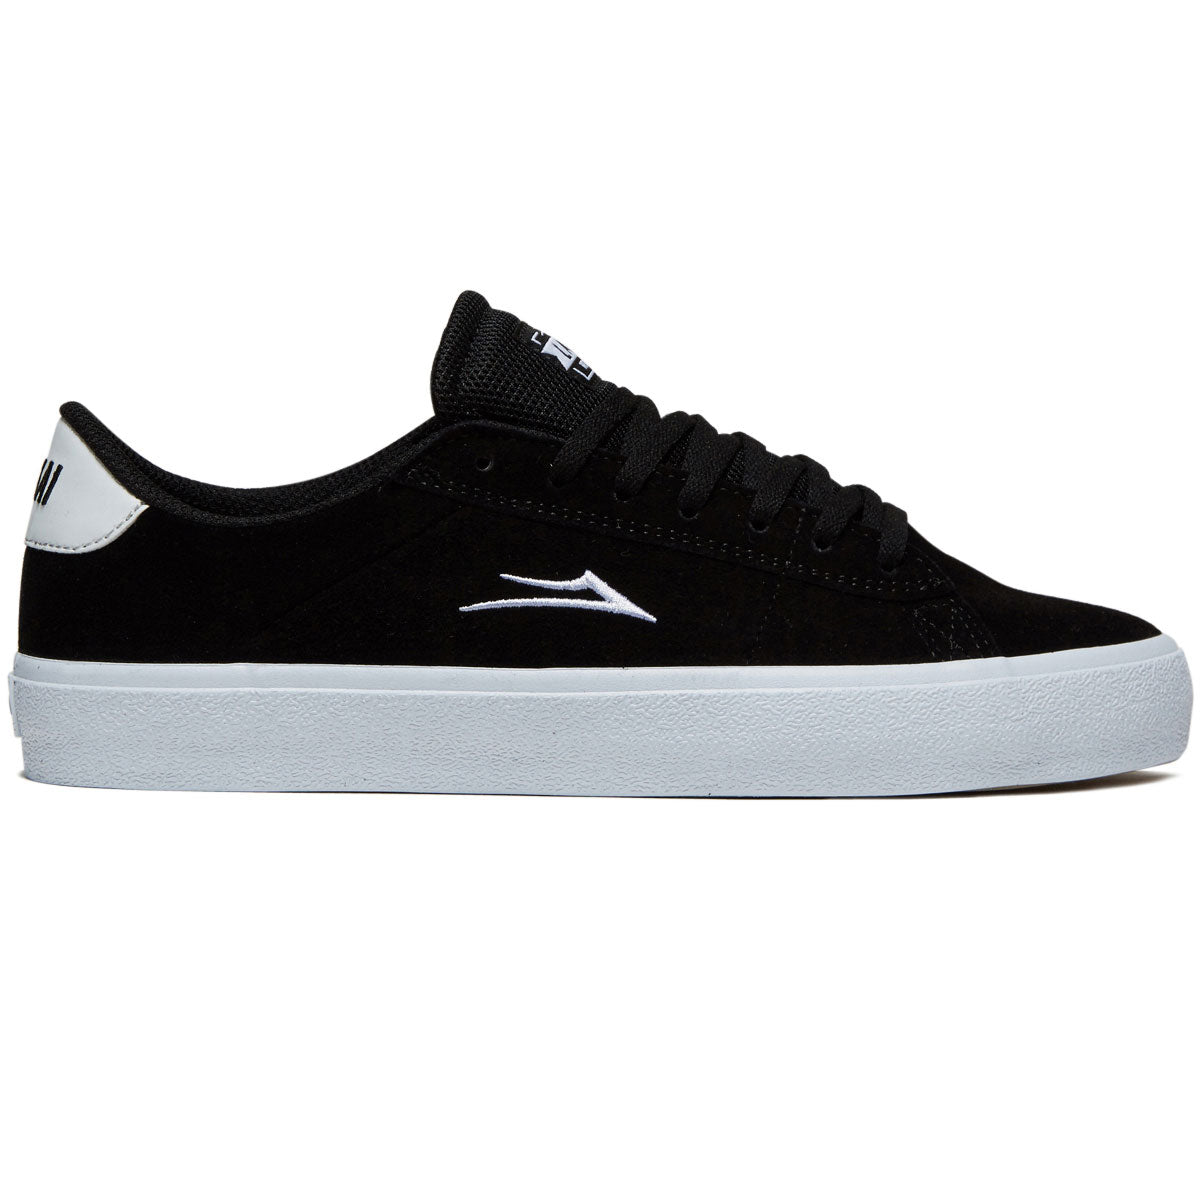 Lakai Newport 2024 Shoes - Black Suede image 1